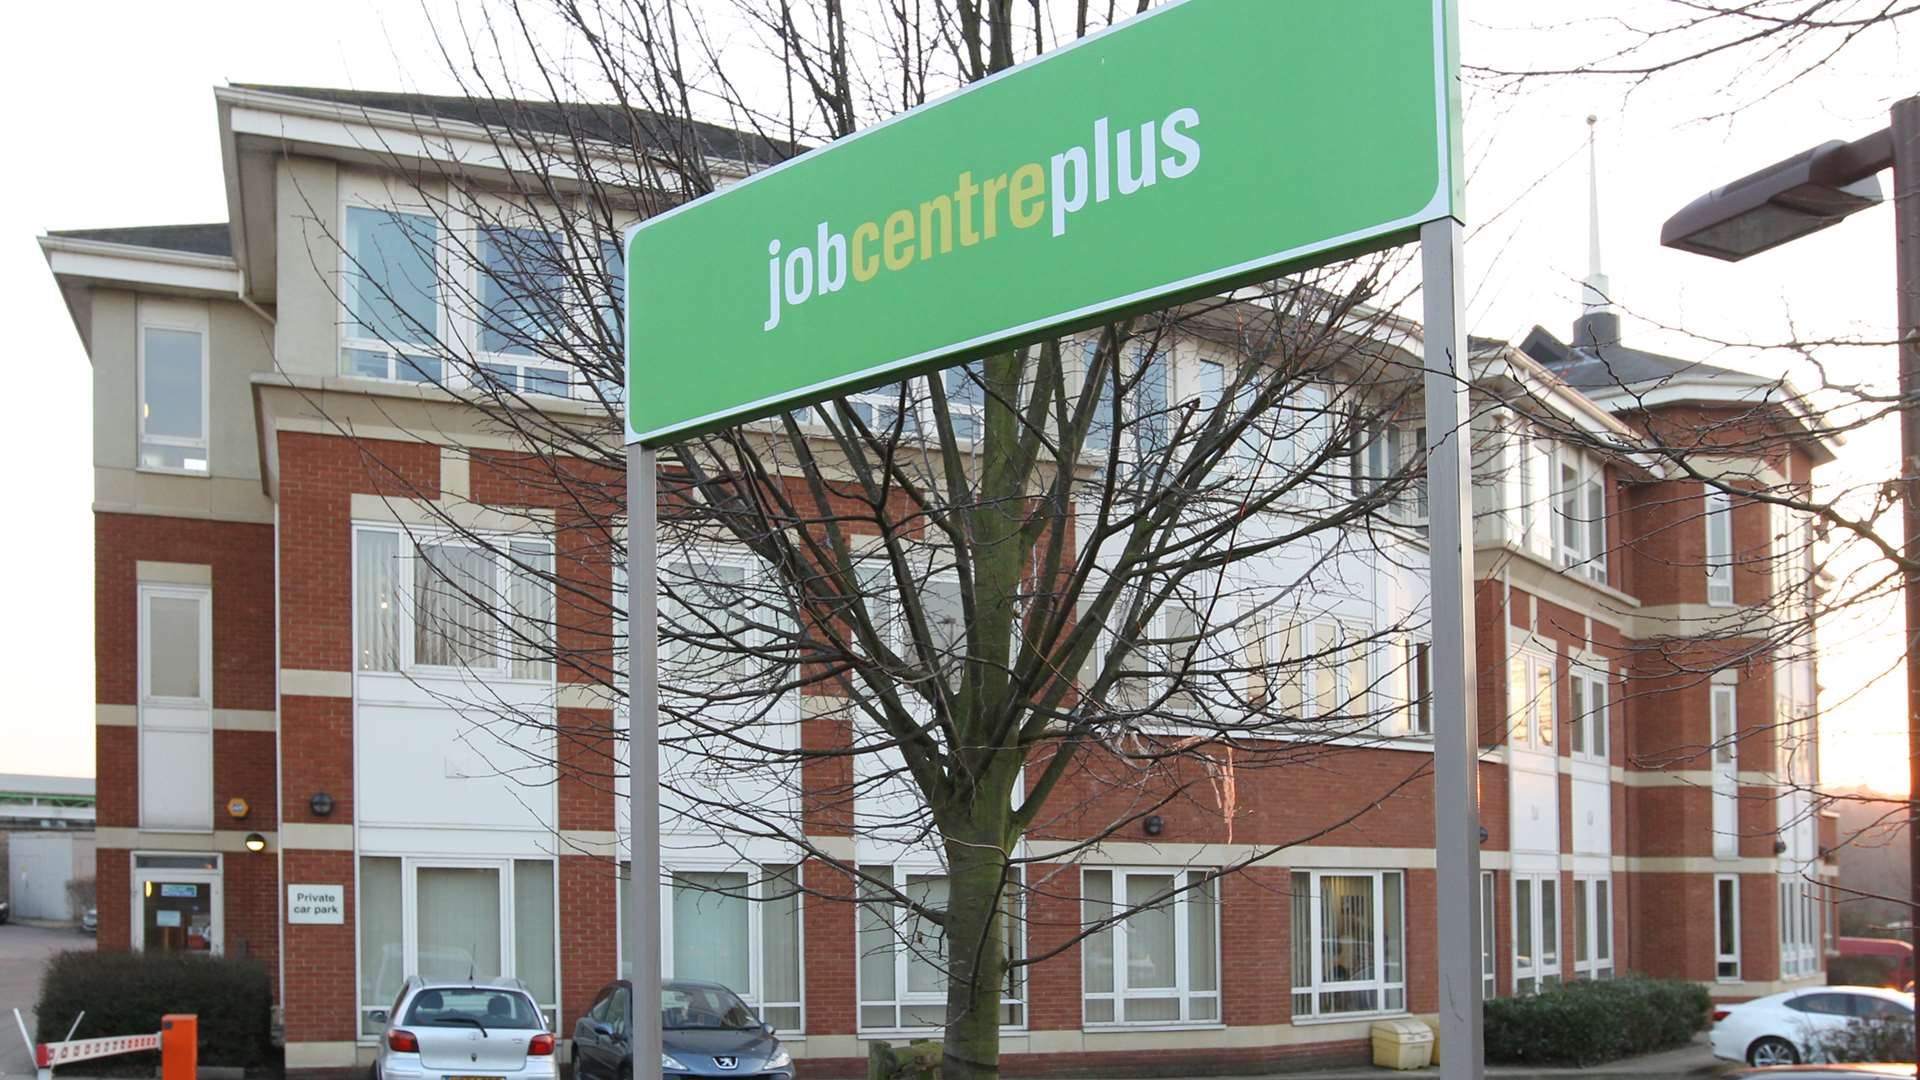 It isn't all gloom for job seekers in Kent